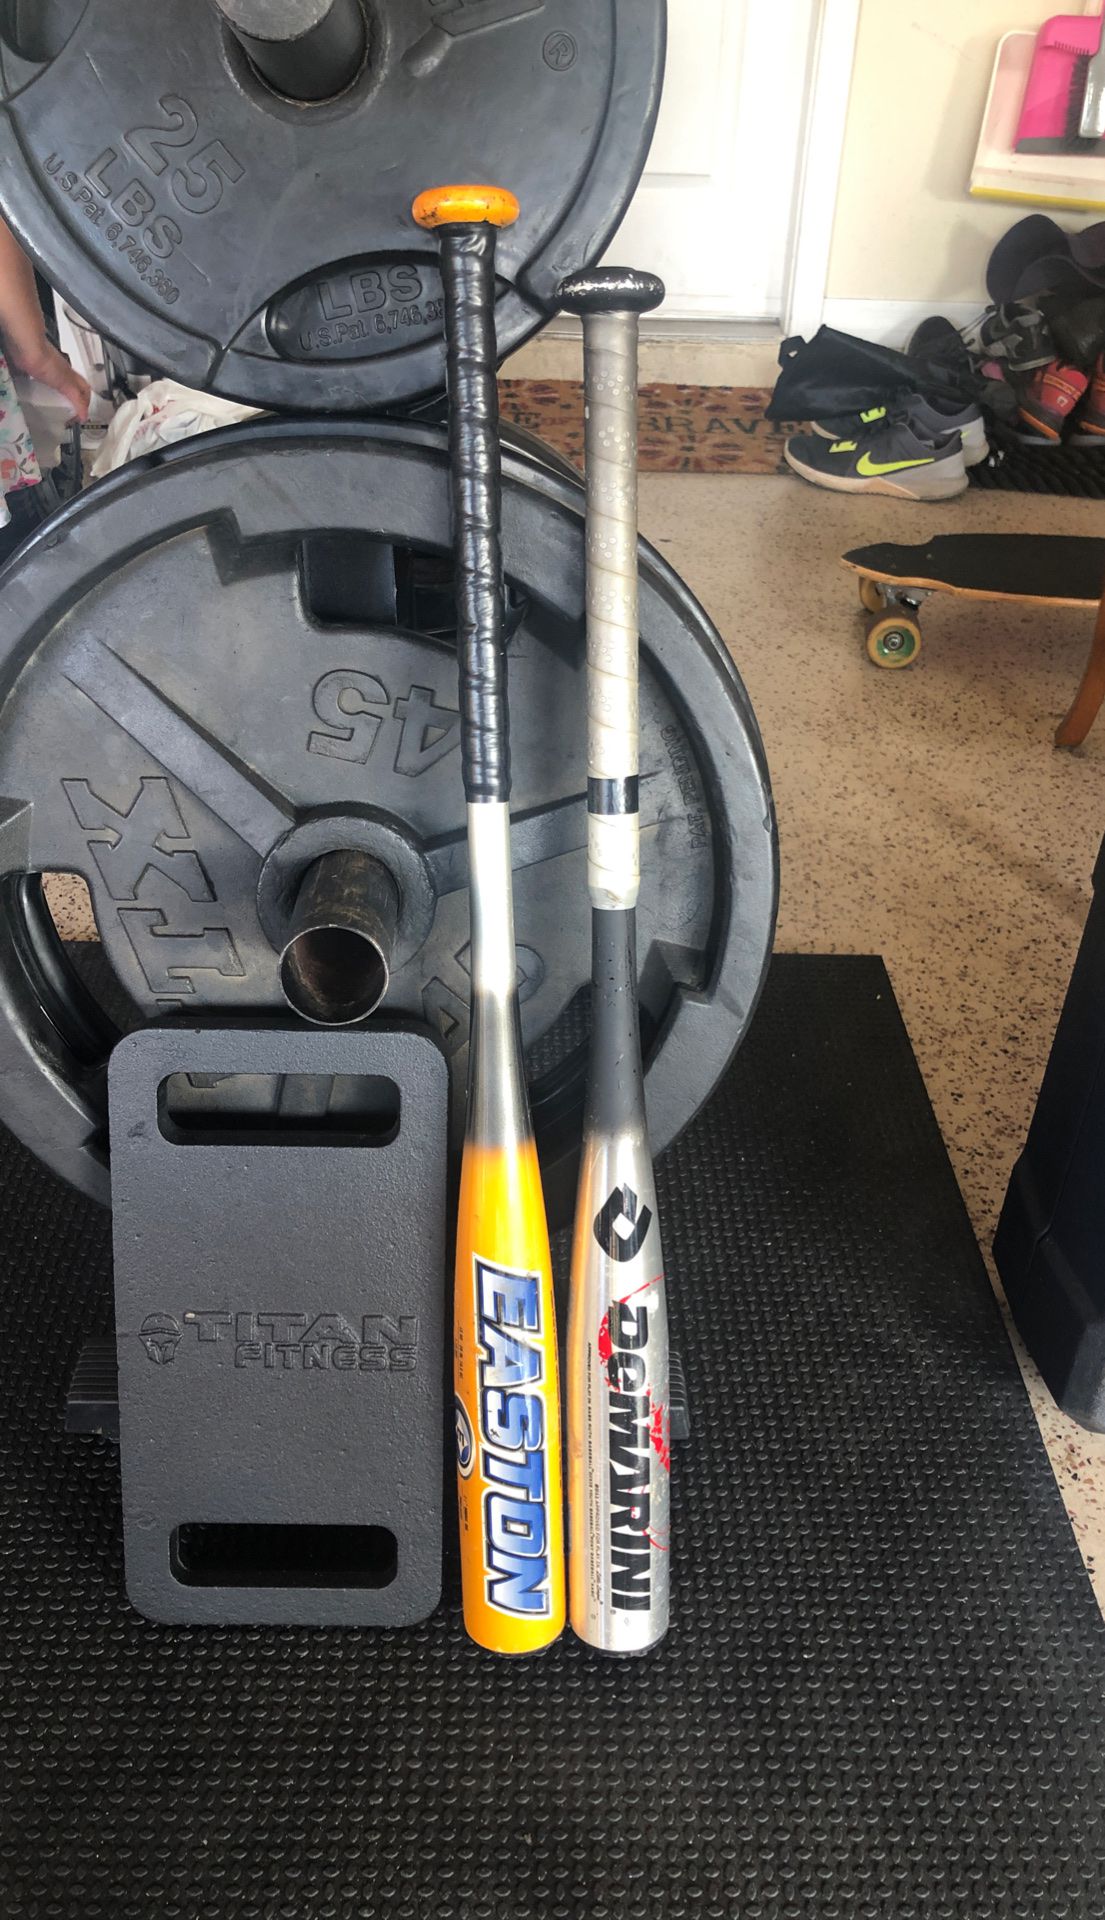 Youth baseball bats, one dimarini, one Easton